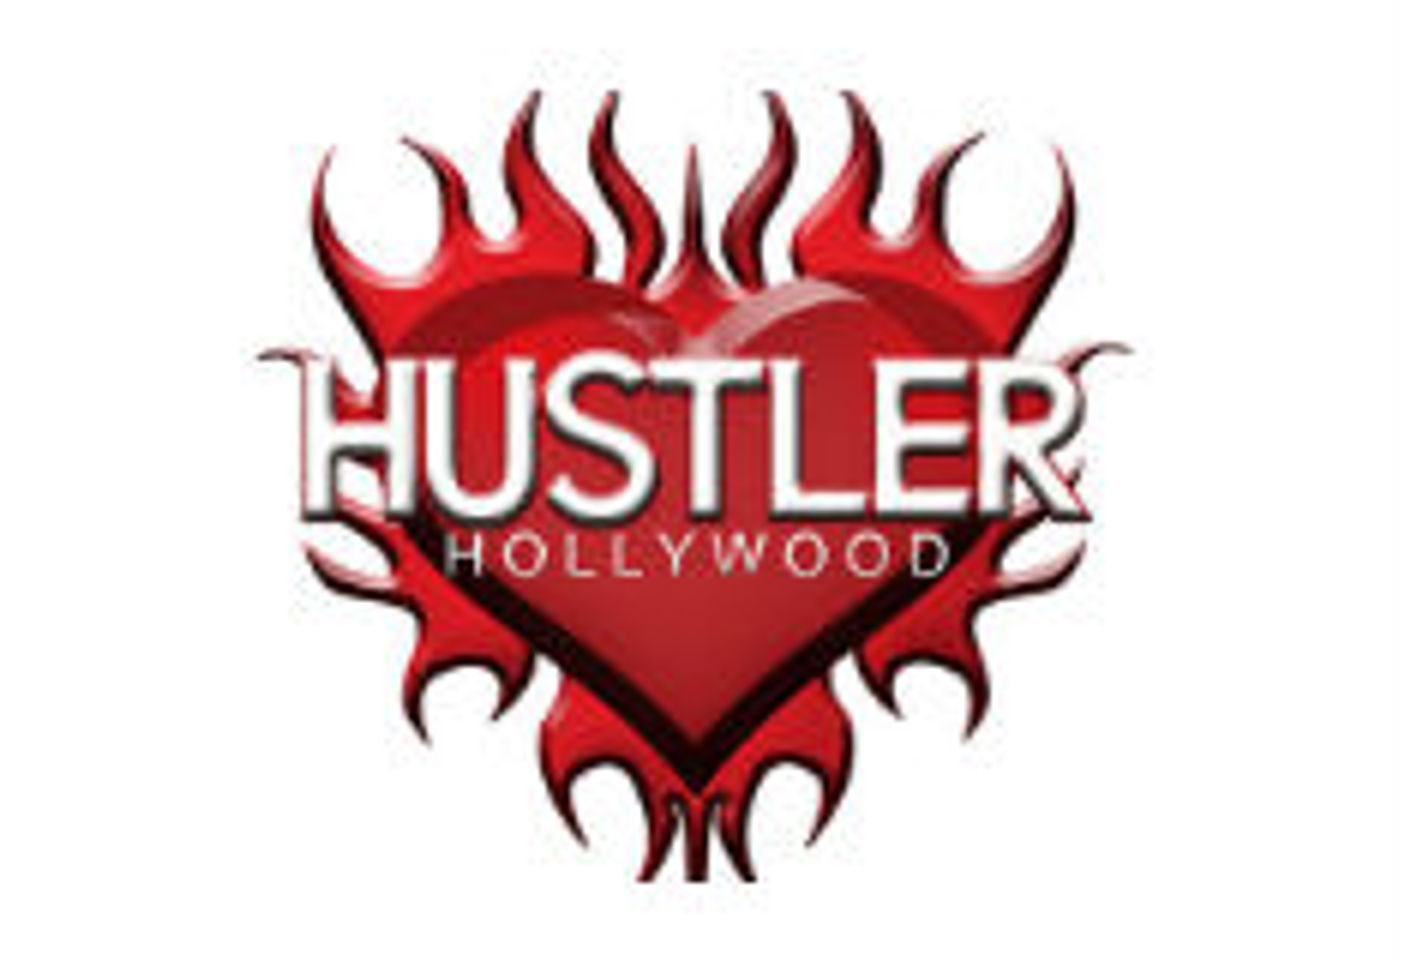 Hustler Hollywood Carrying Hustler Toys’ Remote Control Vibe